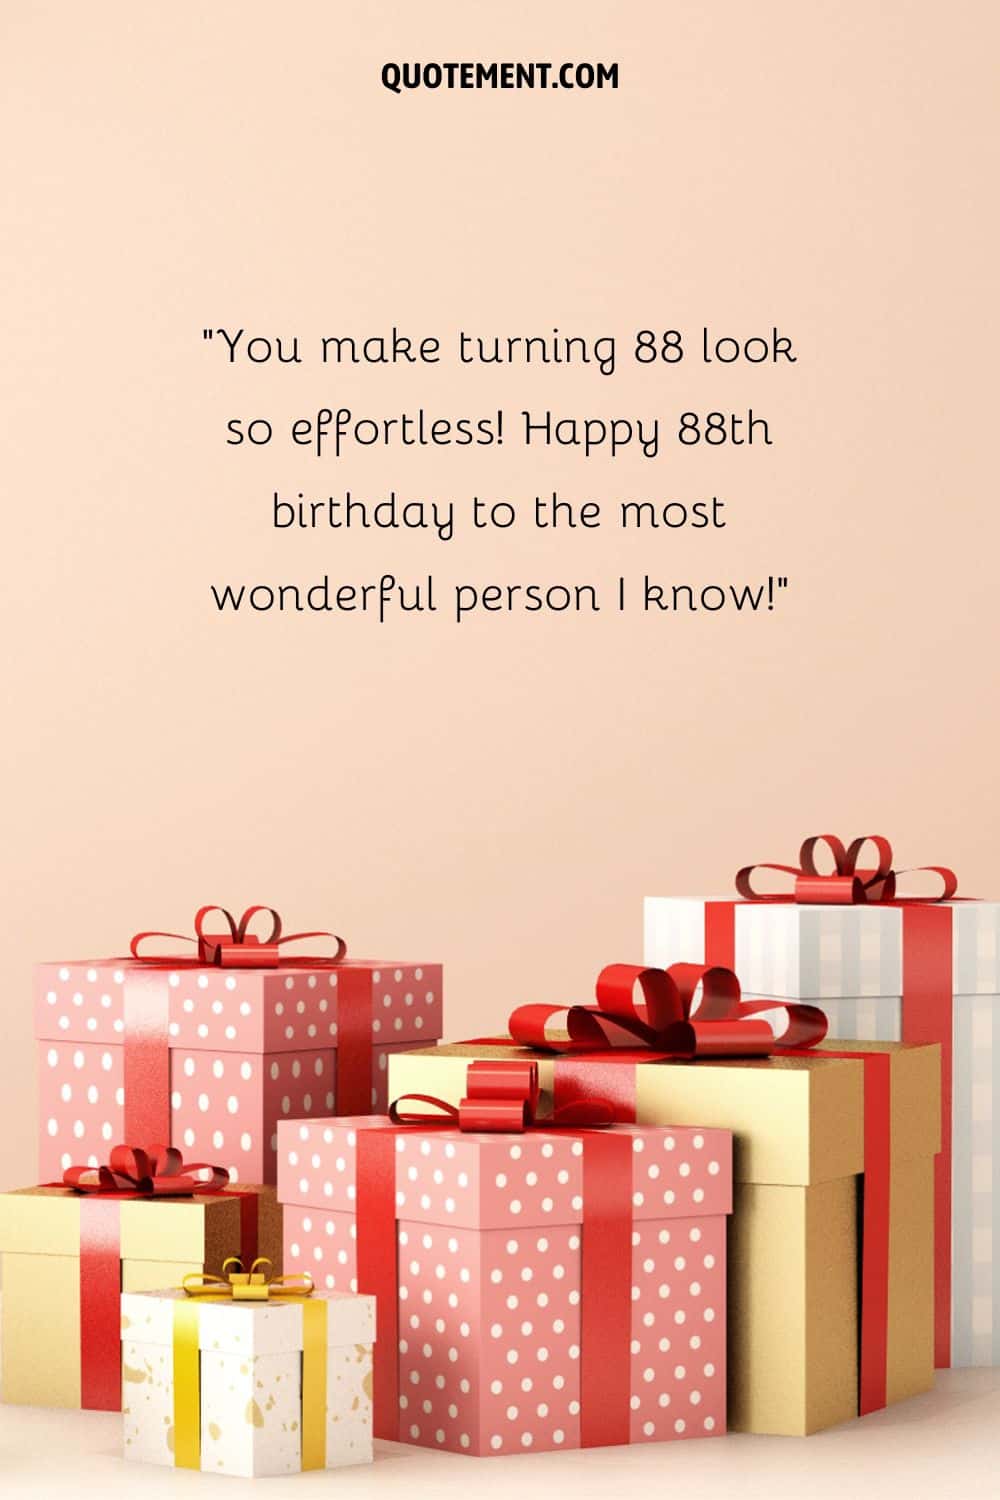 You make turning 88 look so effortless!